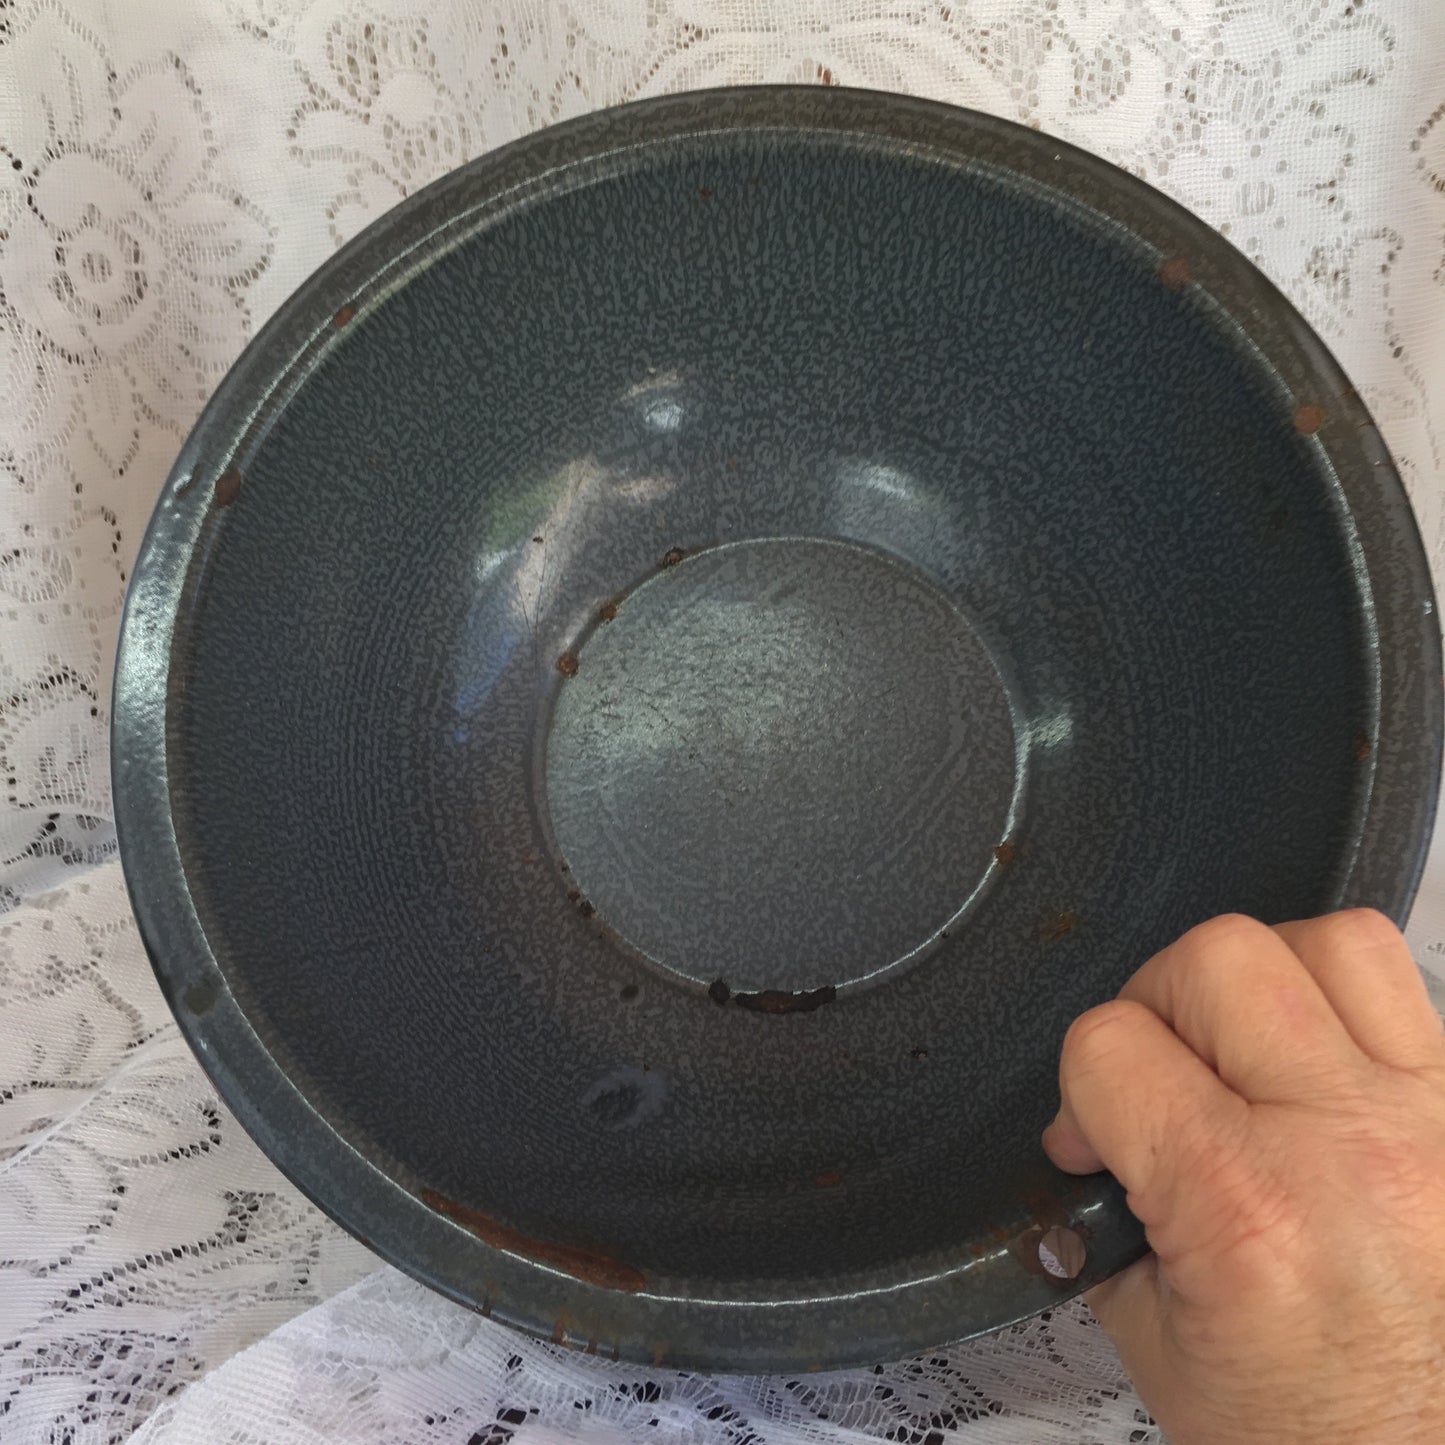 Vintage Enamel bowl